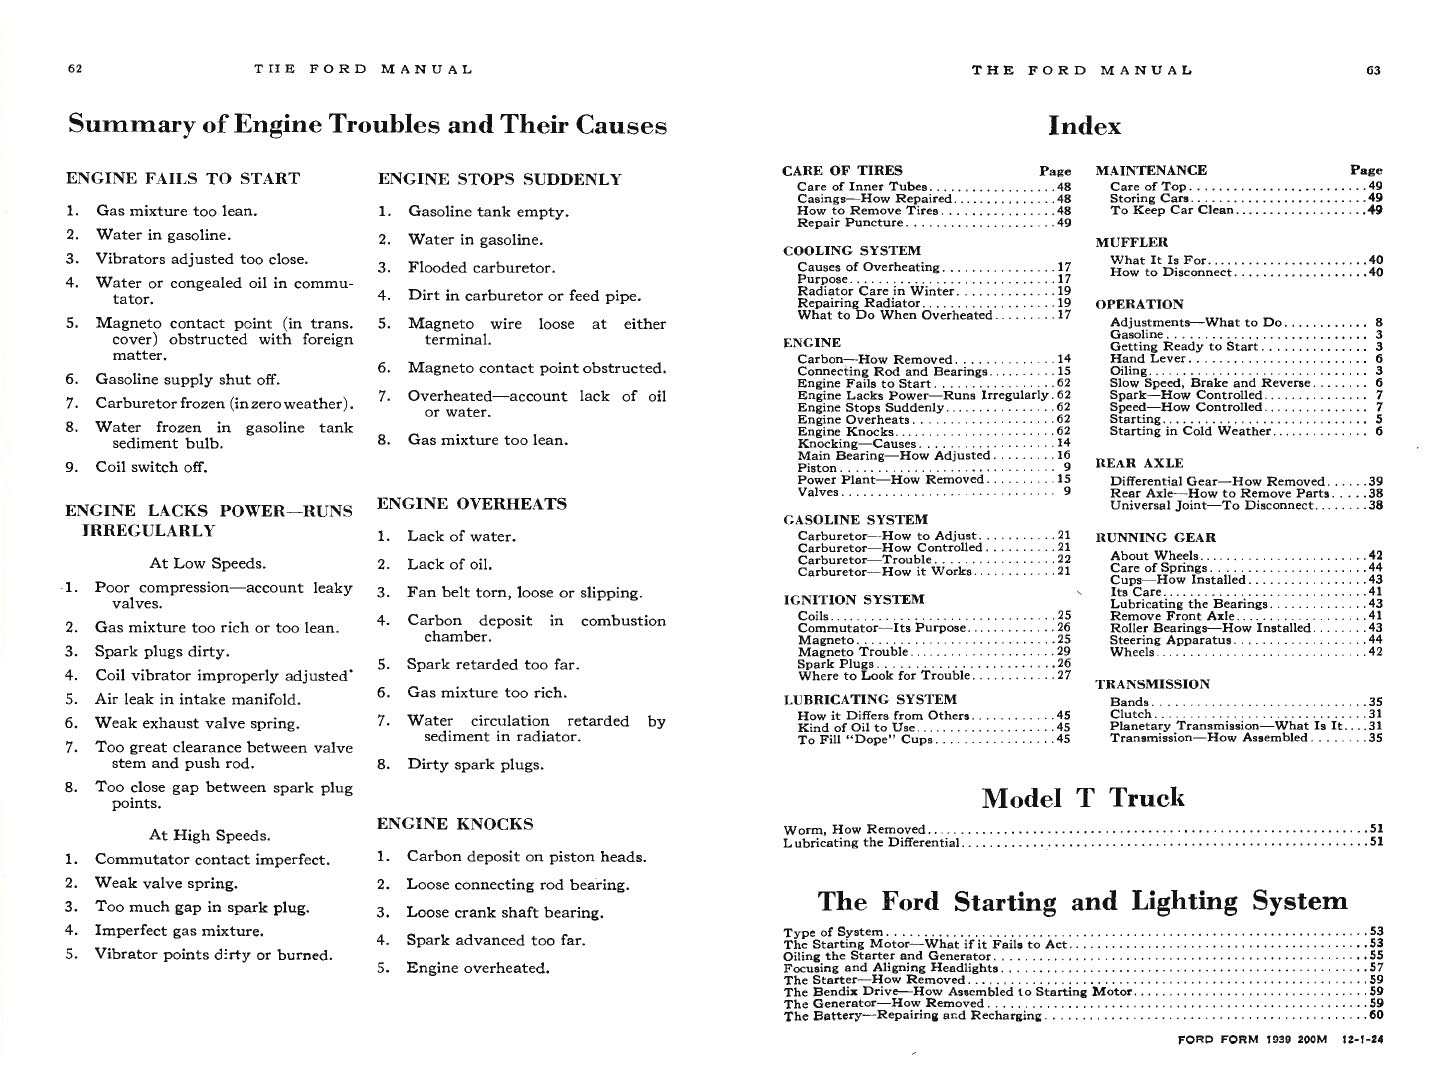 1922_Ford_Manual-62-63